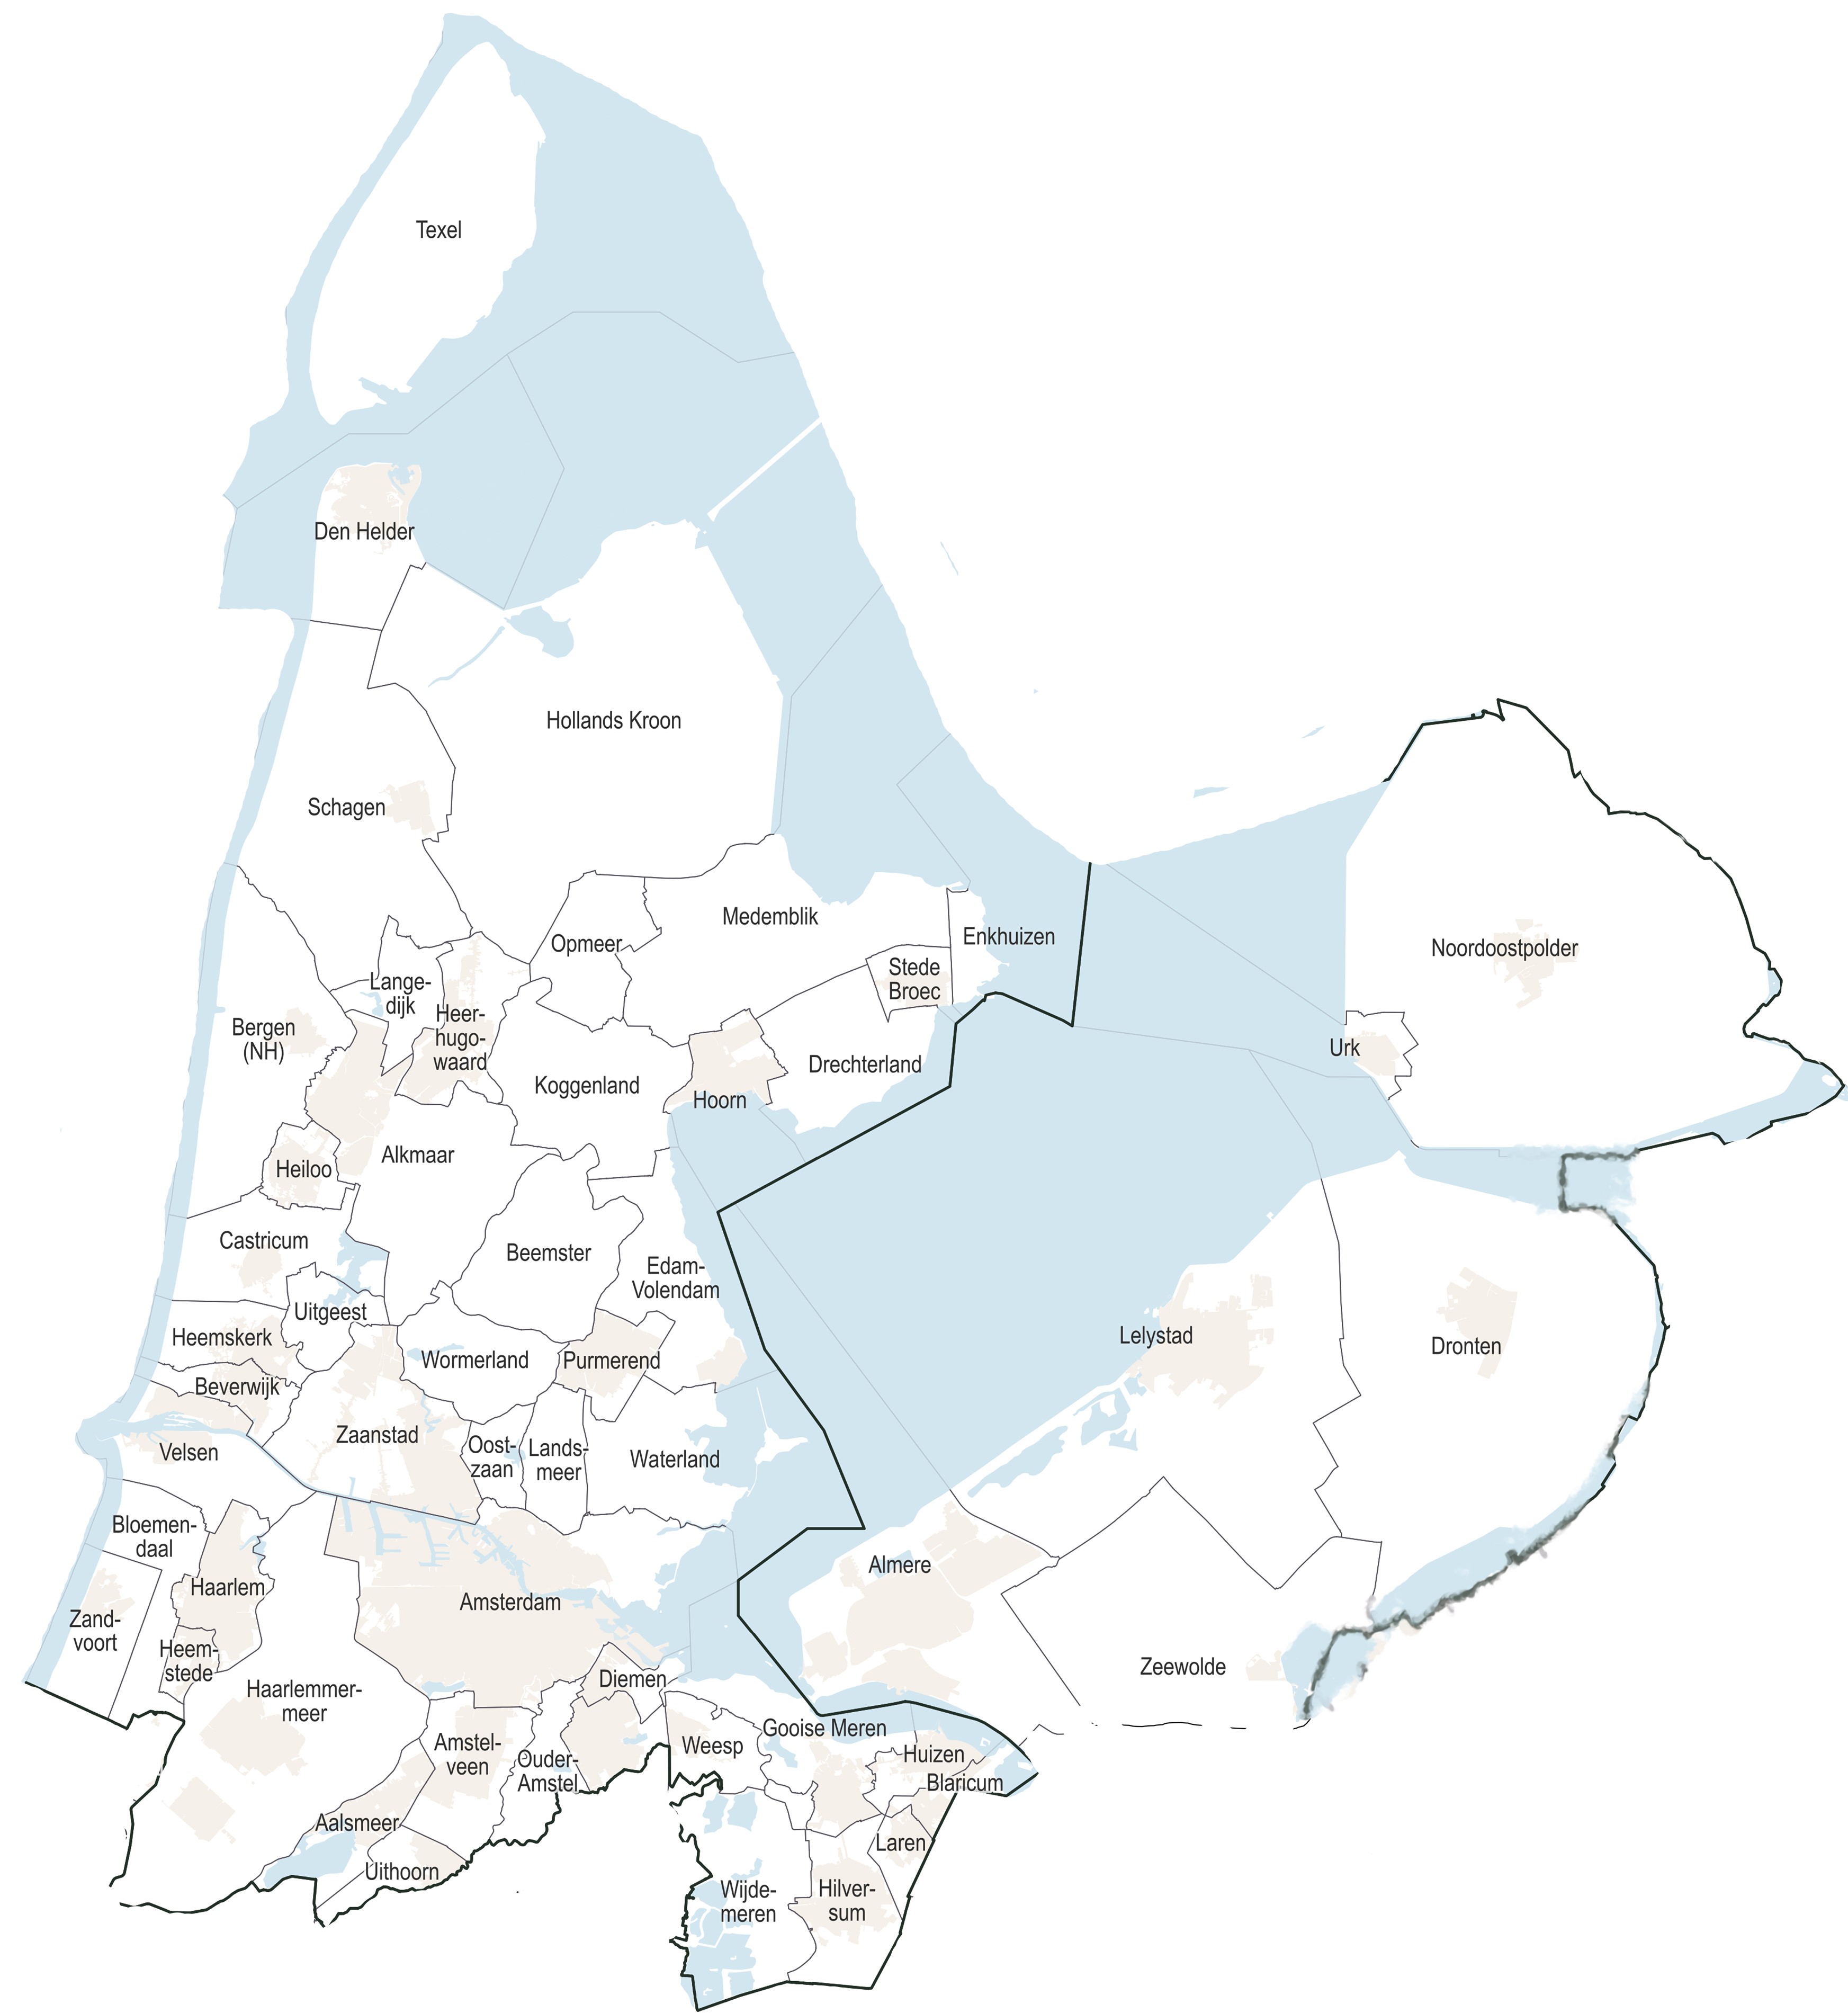 Netwerk Integrale Kindzorg (NIK) Noord-Holland & Flevoland